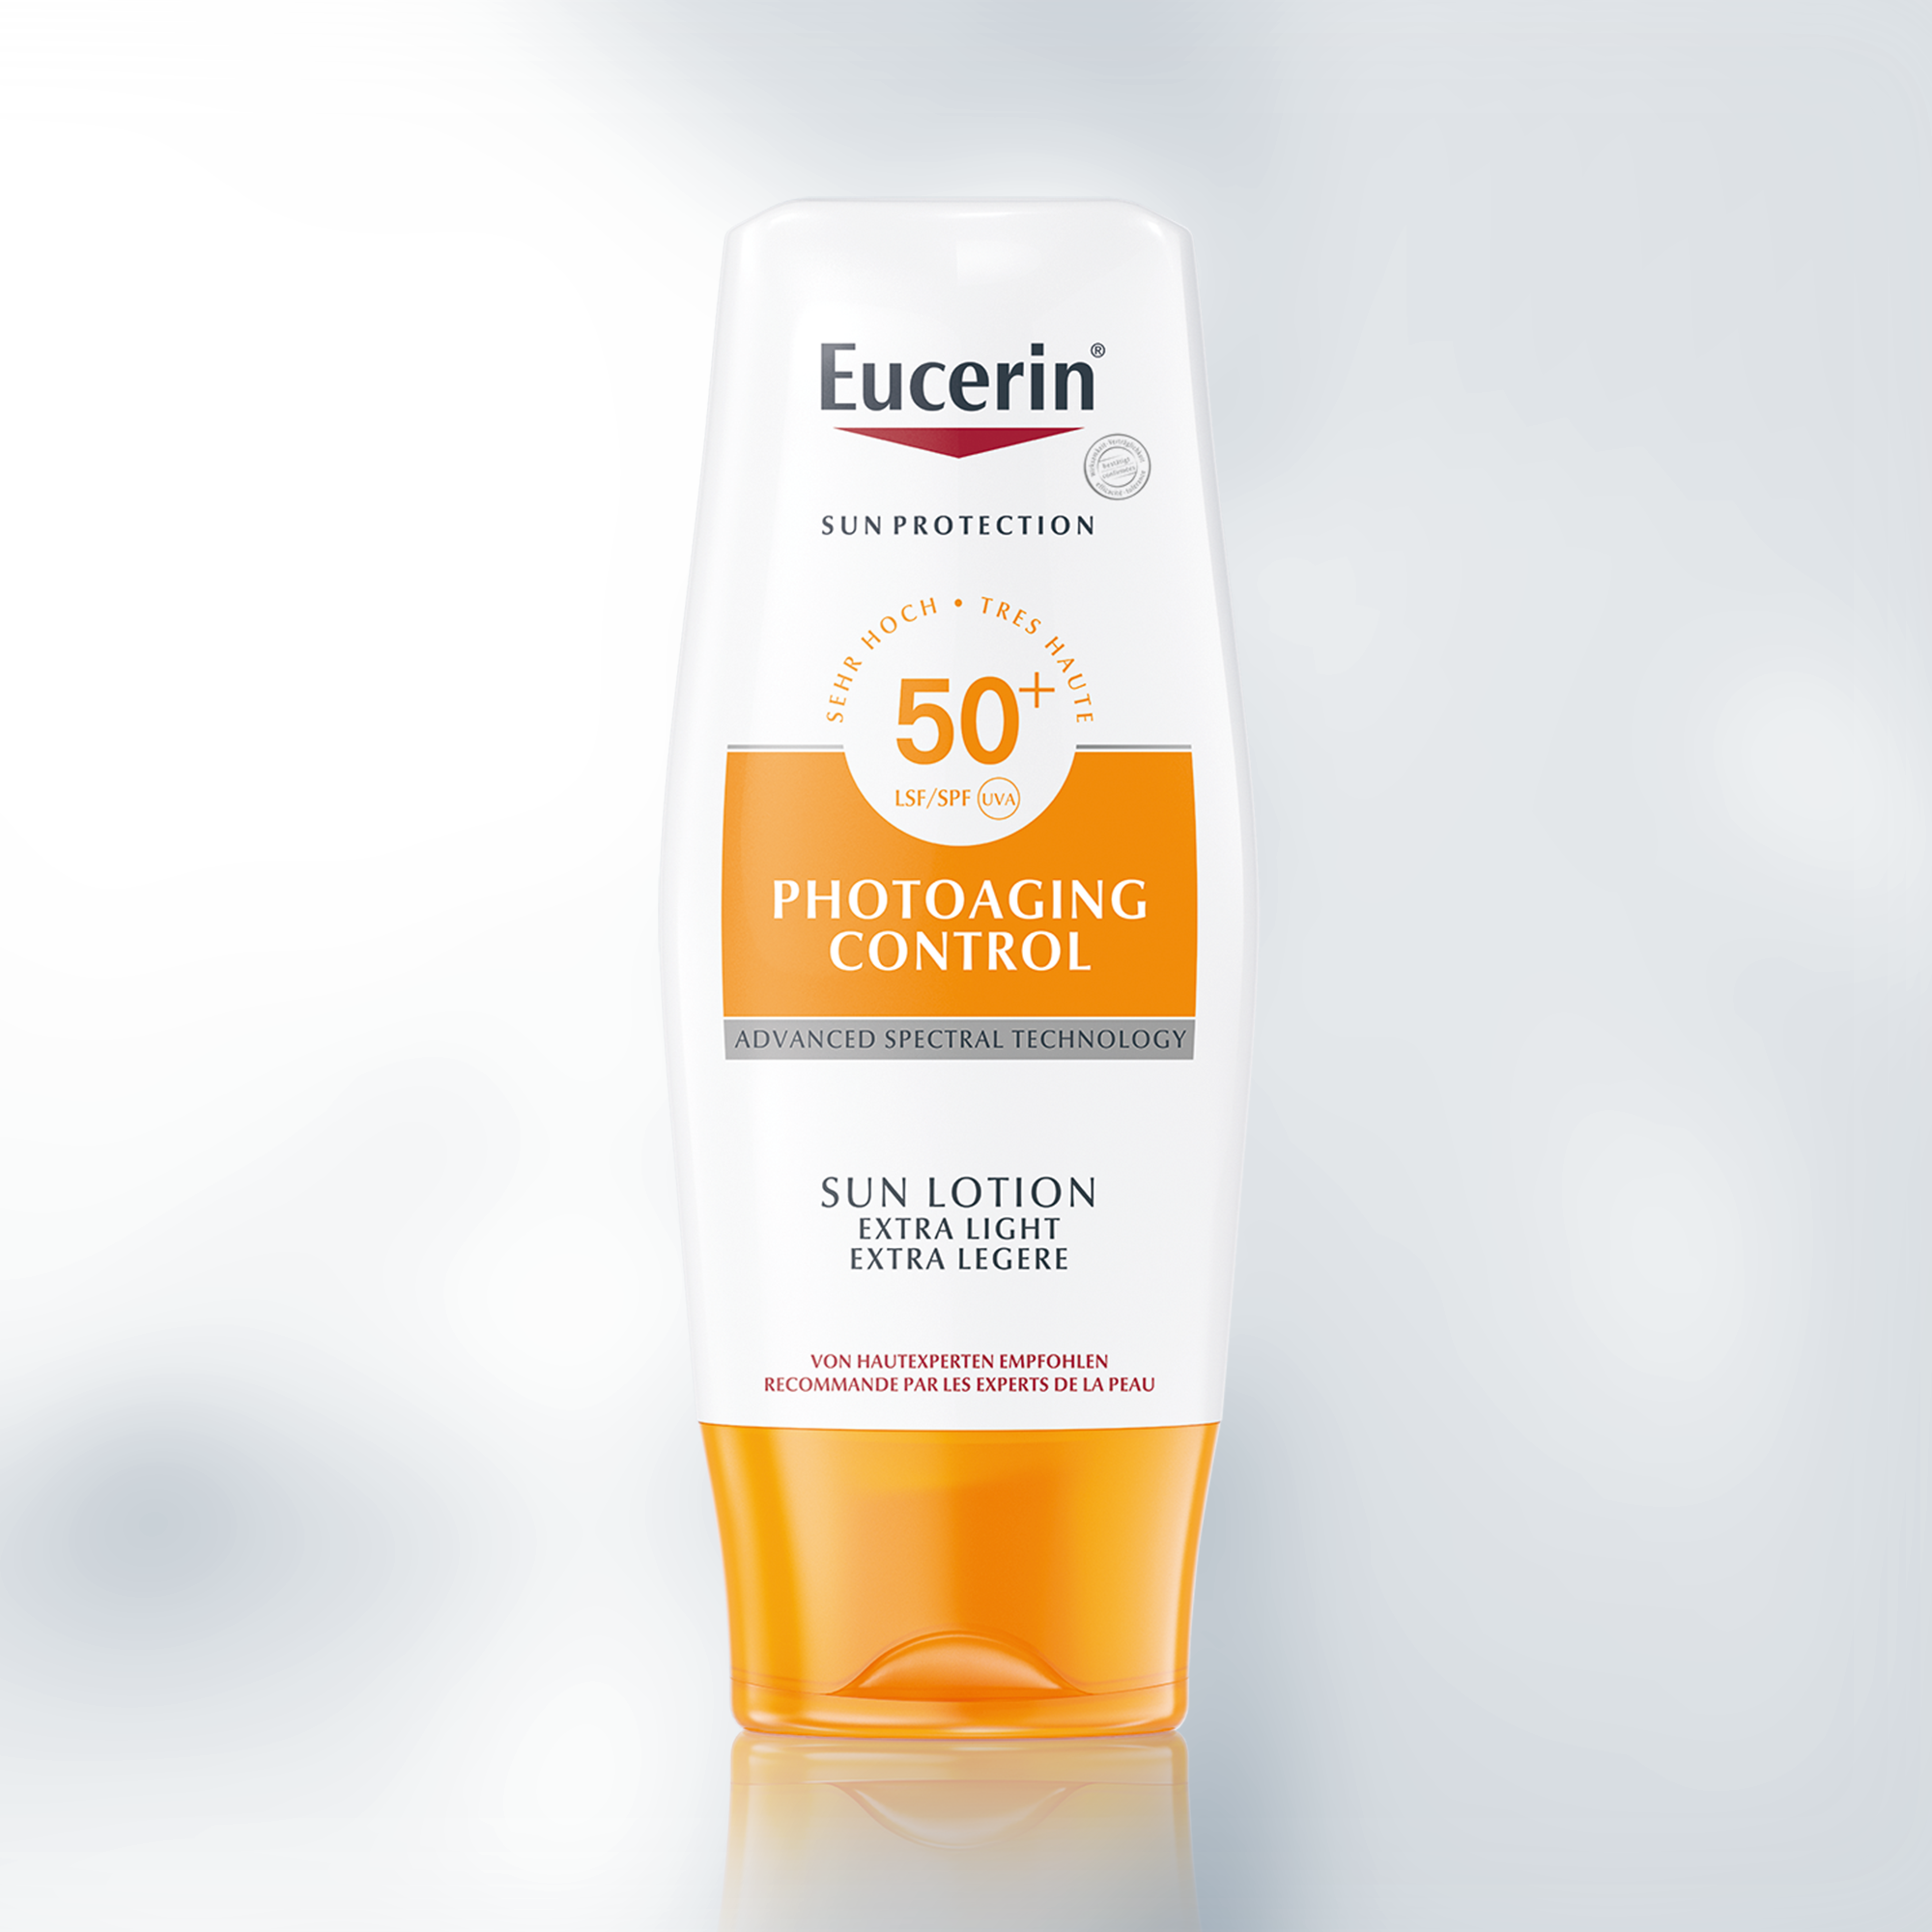 Eucerin Photoaging Control Sun Lotion Extra Light SPF 50+